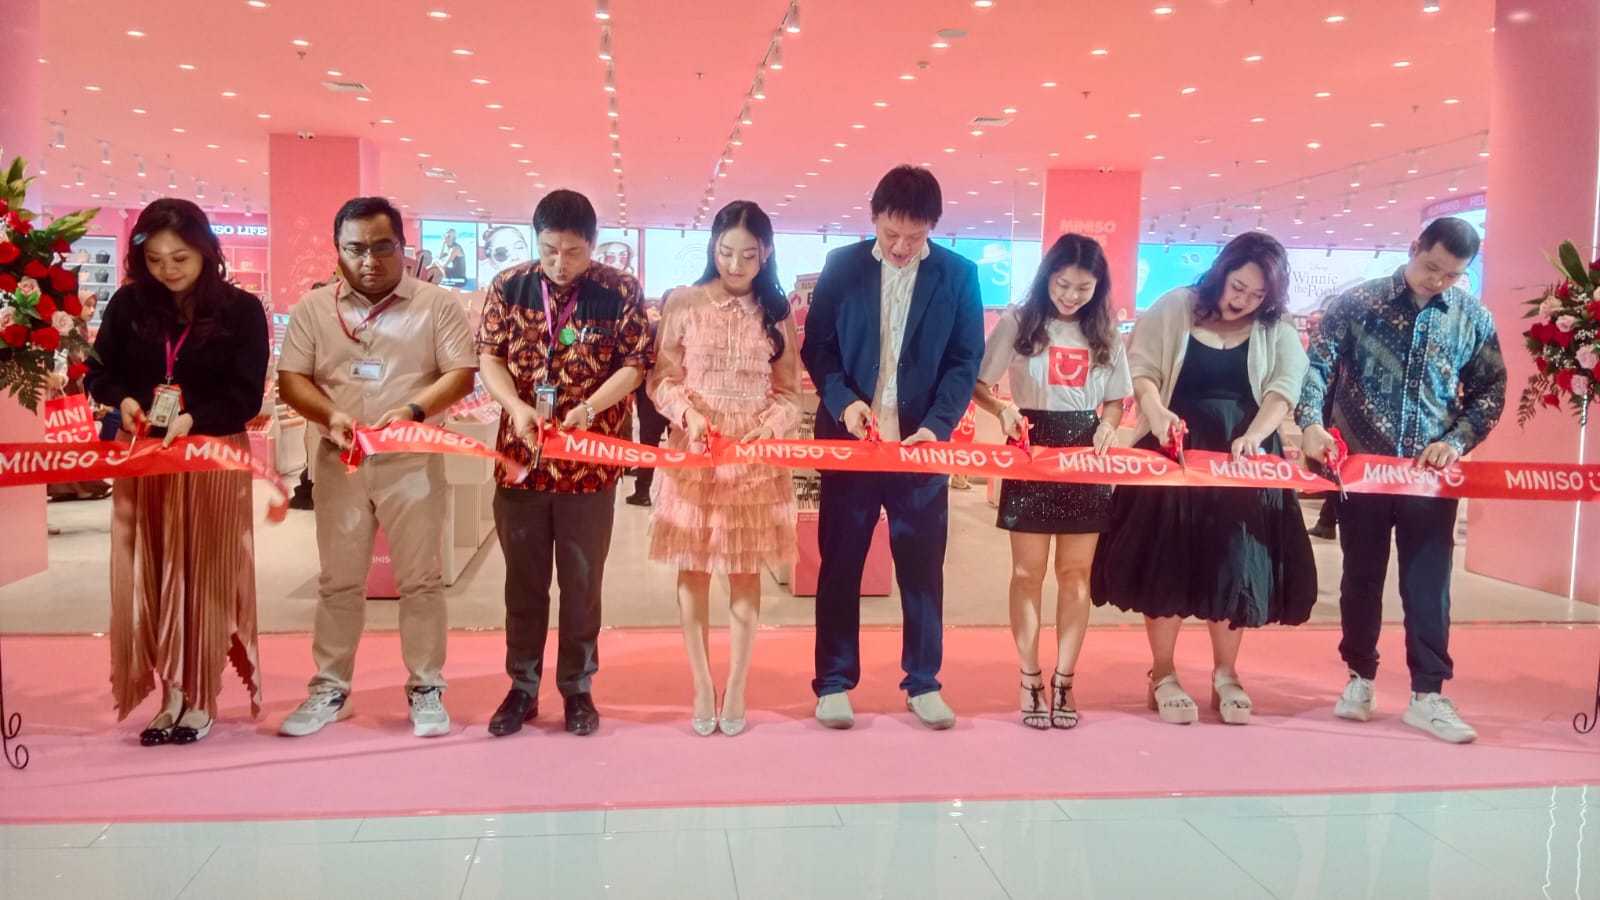 Store MINISO Terbesar di Dunia Hadir di Aeon Mall Deltamas